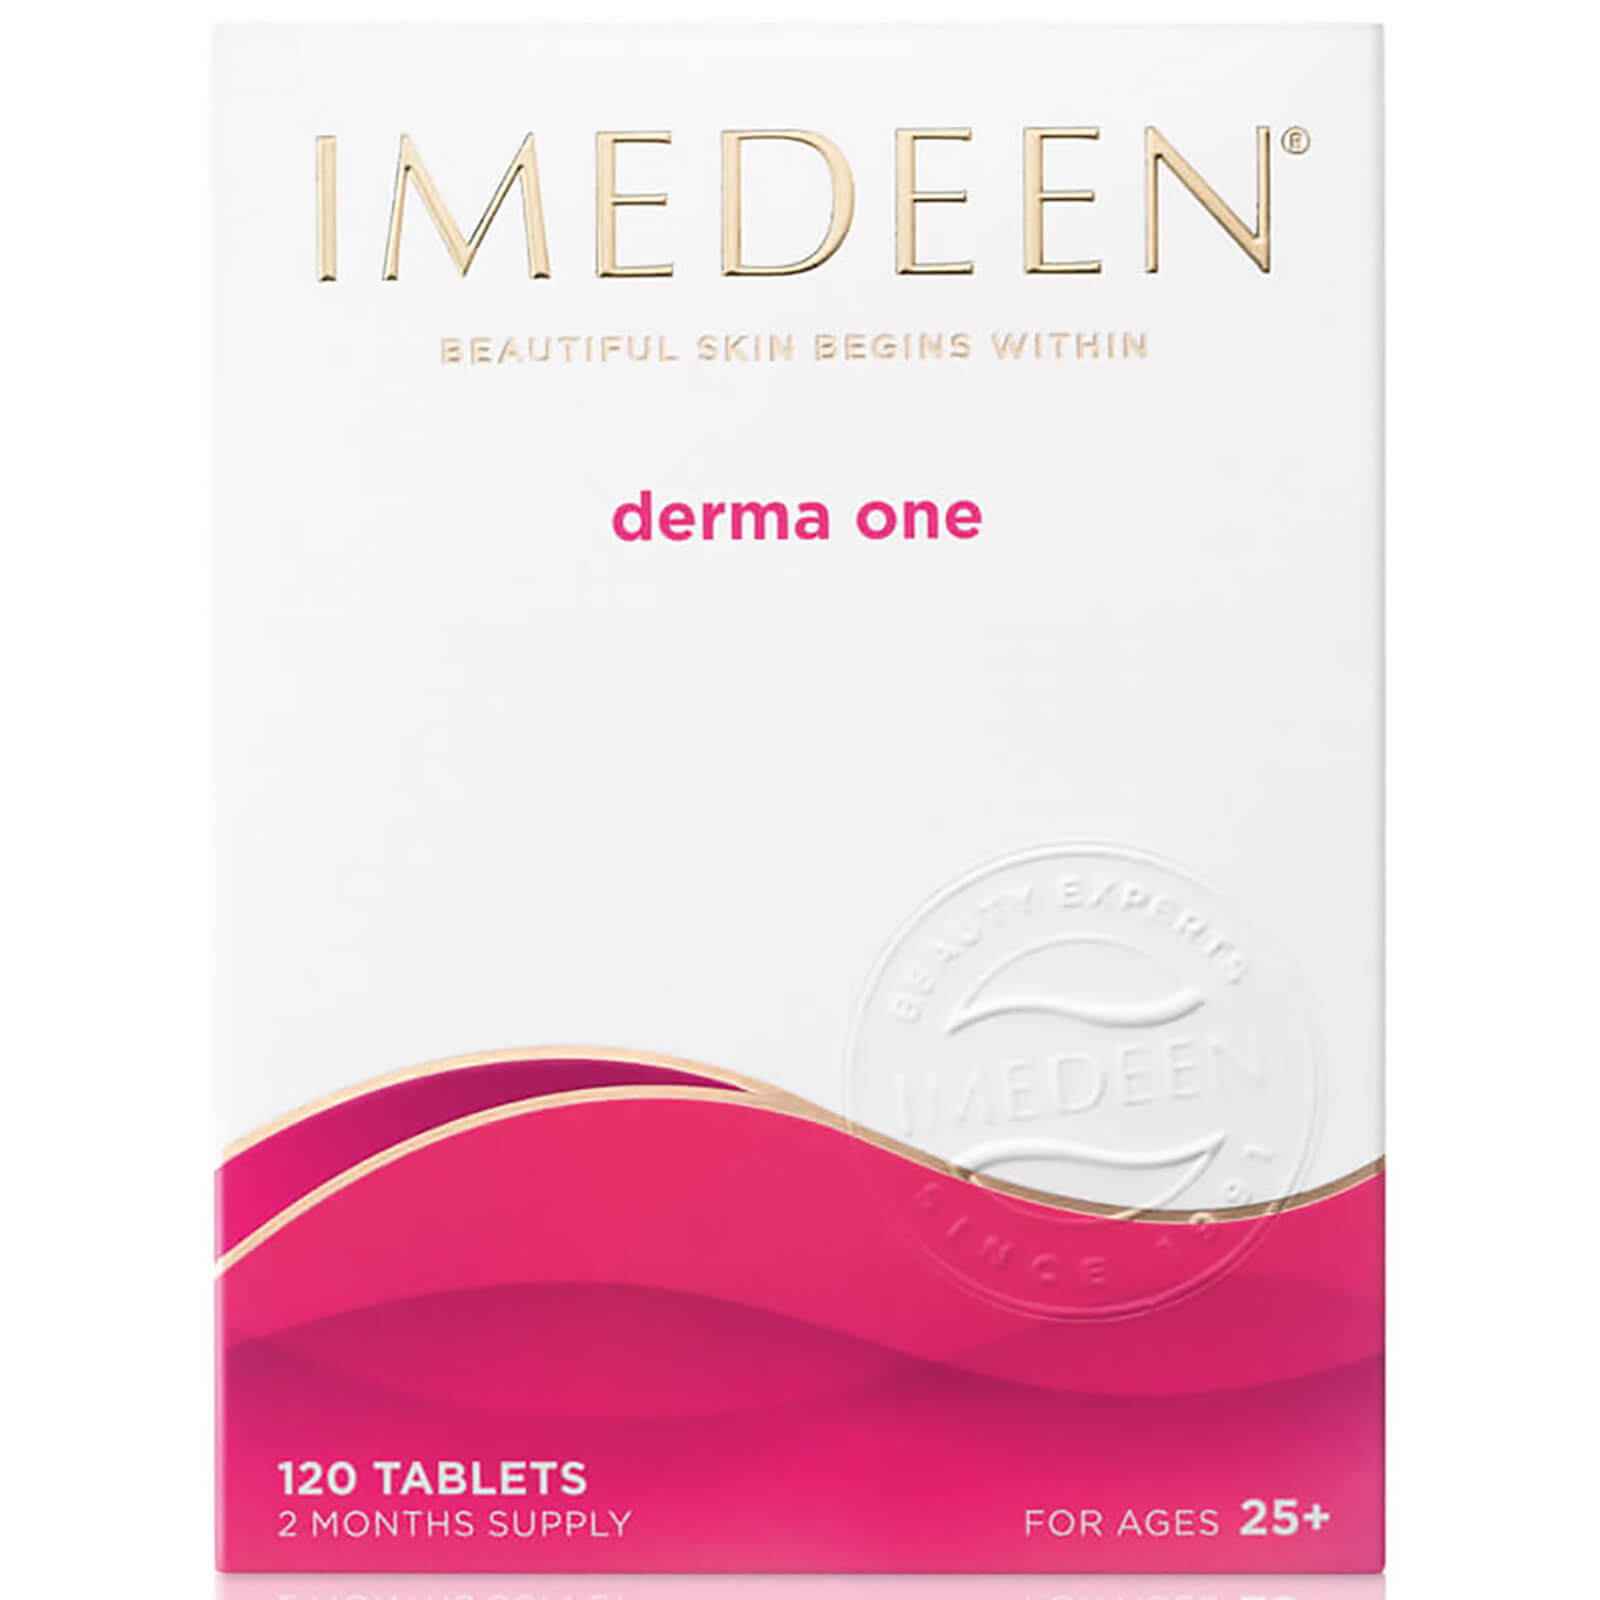 Imedeen Derma One Tablets (120 Tablets) (Age 25+) lookfantastic.com imagine